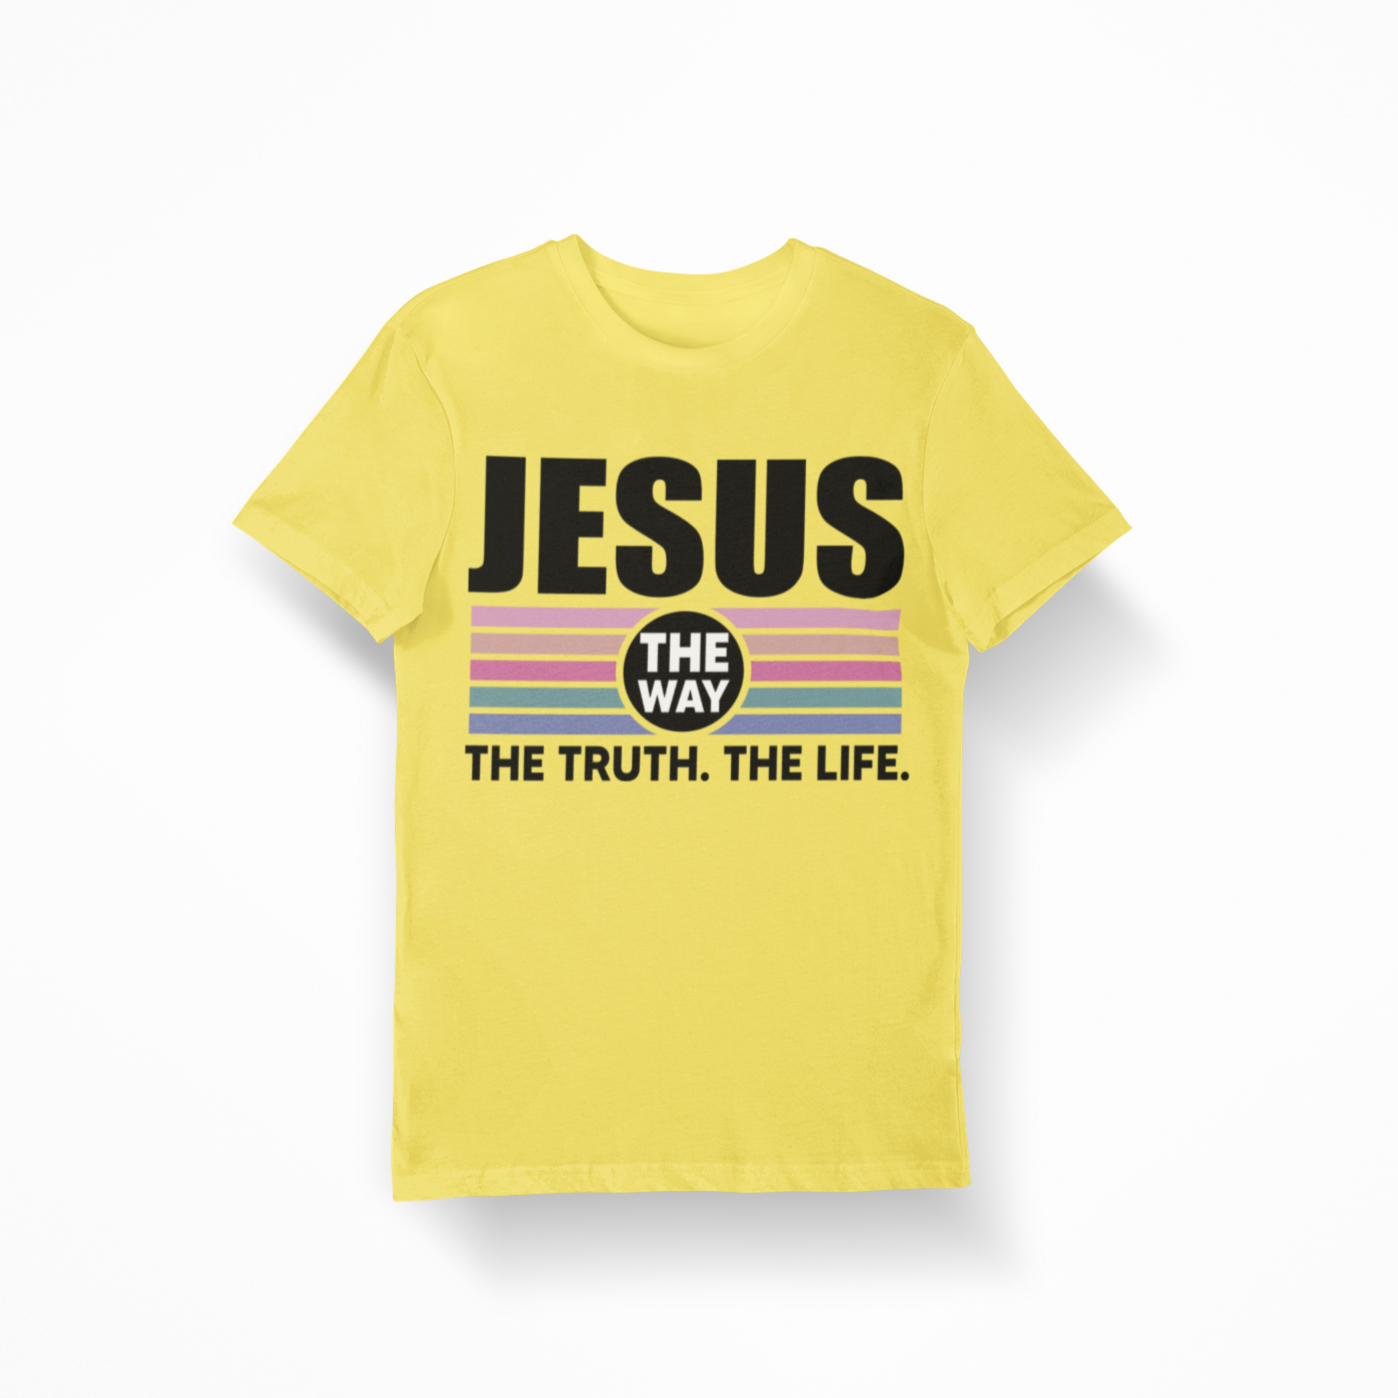 JESUS IS THE WAY T-SHIRT